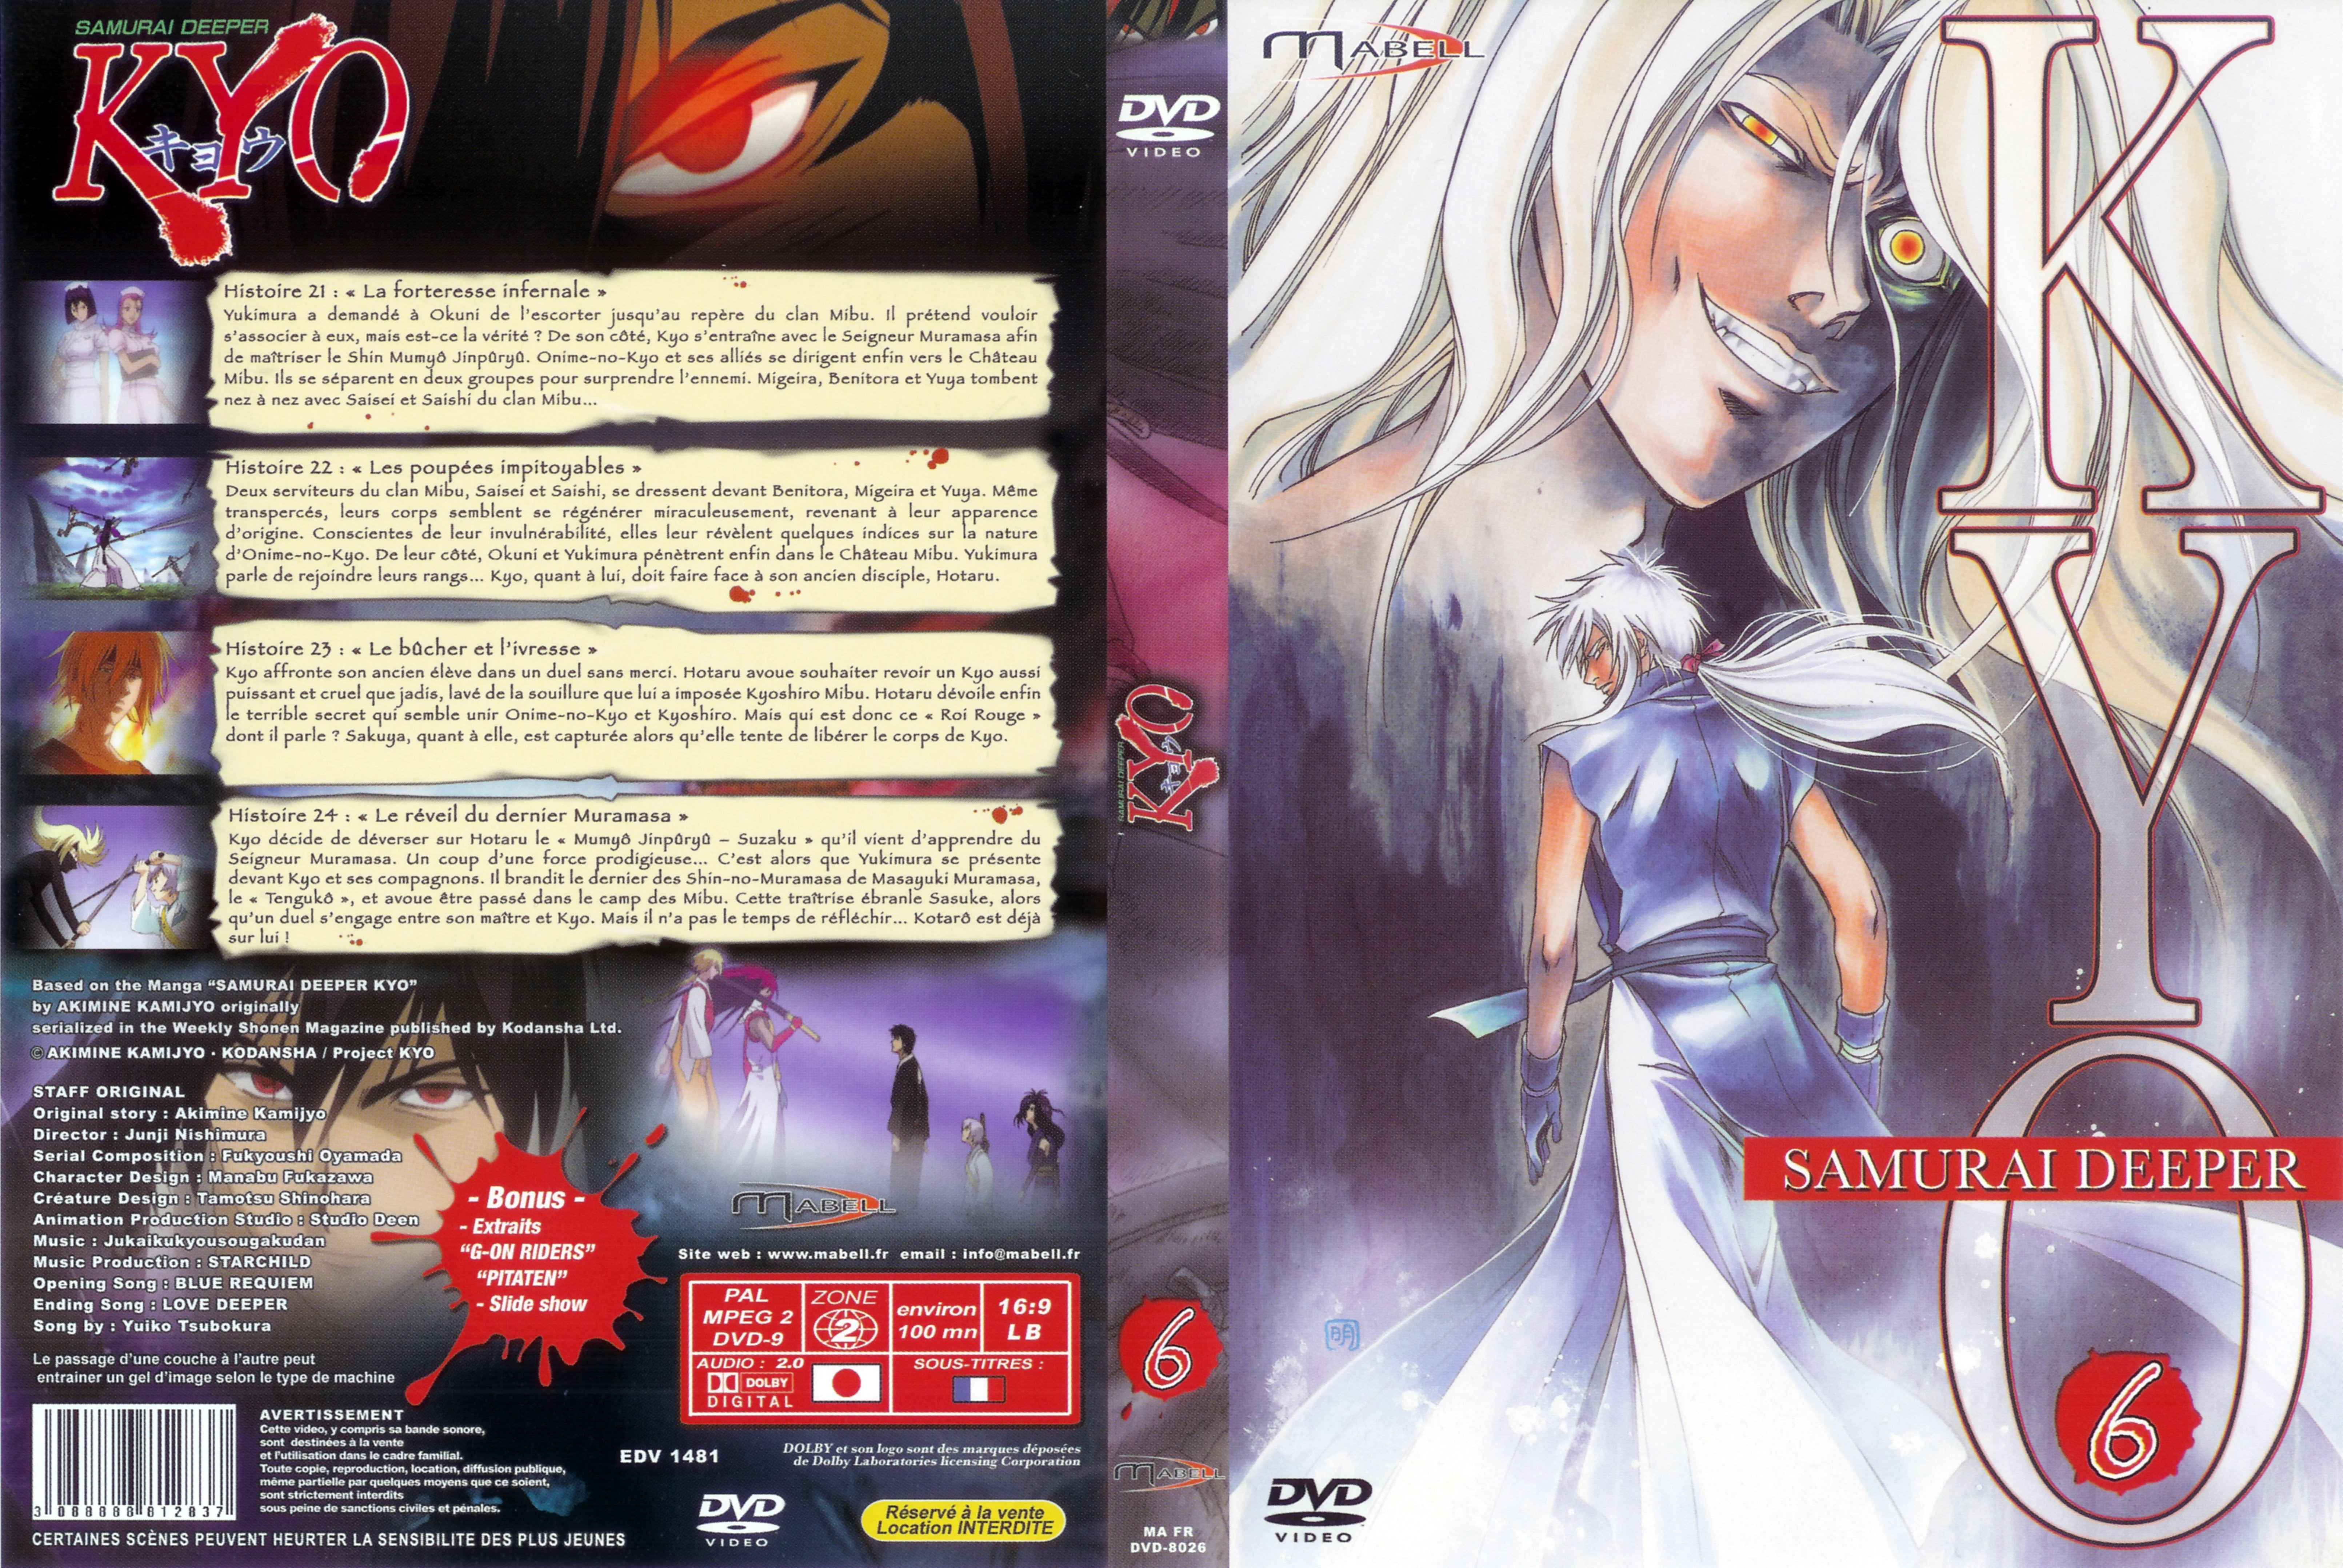 Jaquette DVD Kyo vol 6